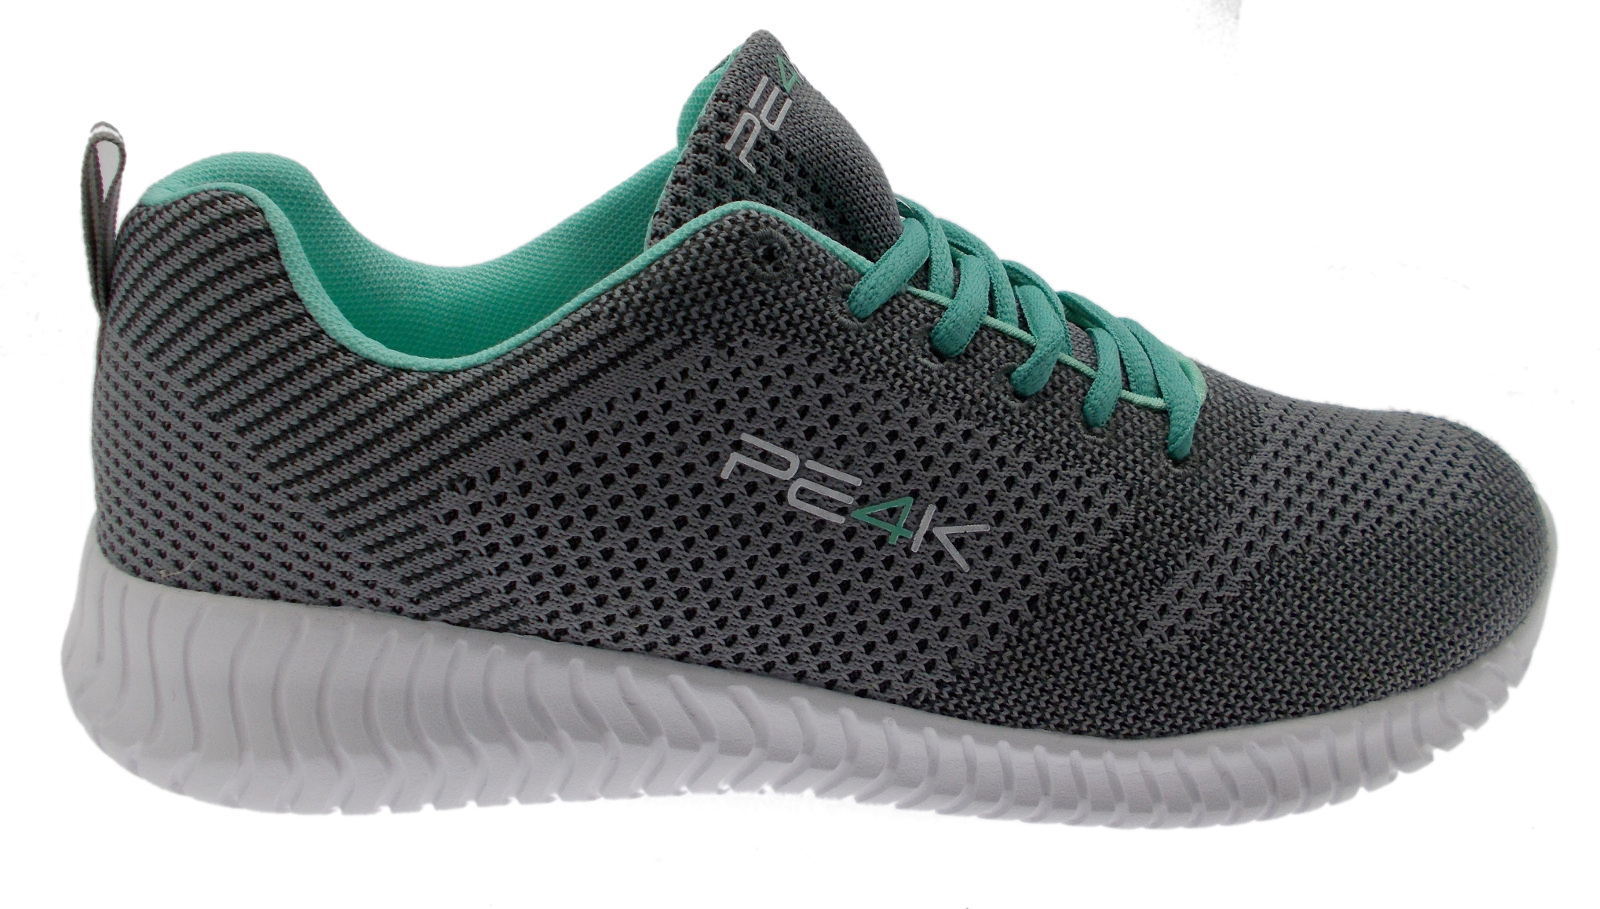 L10-s30ac Grey Sneakers Footbed Memory Form pe4k | eBay